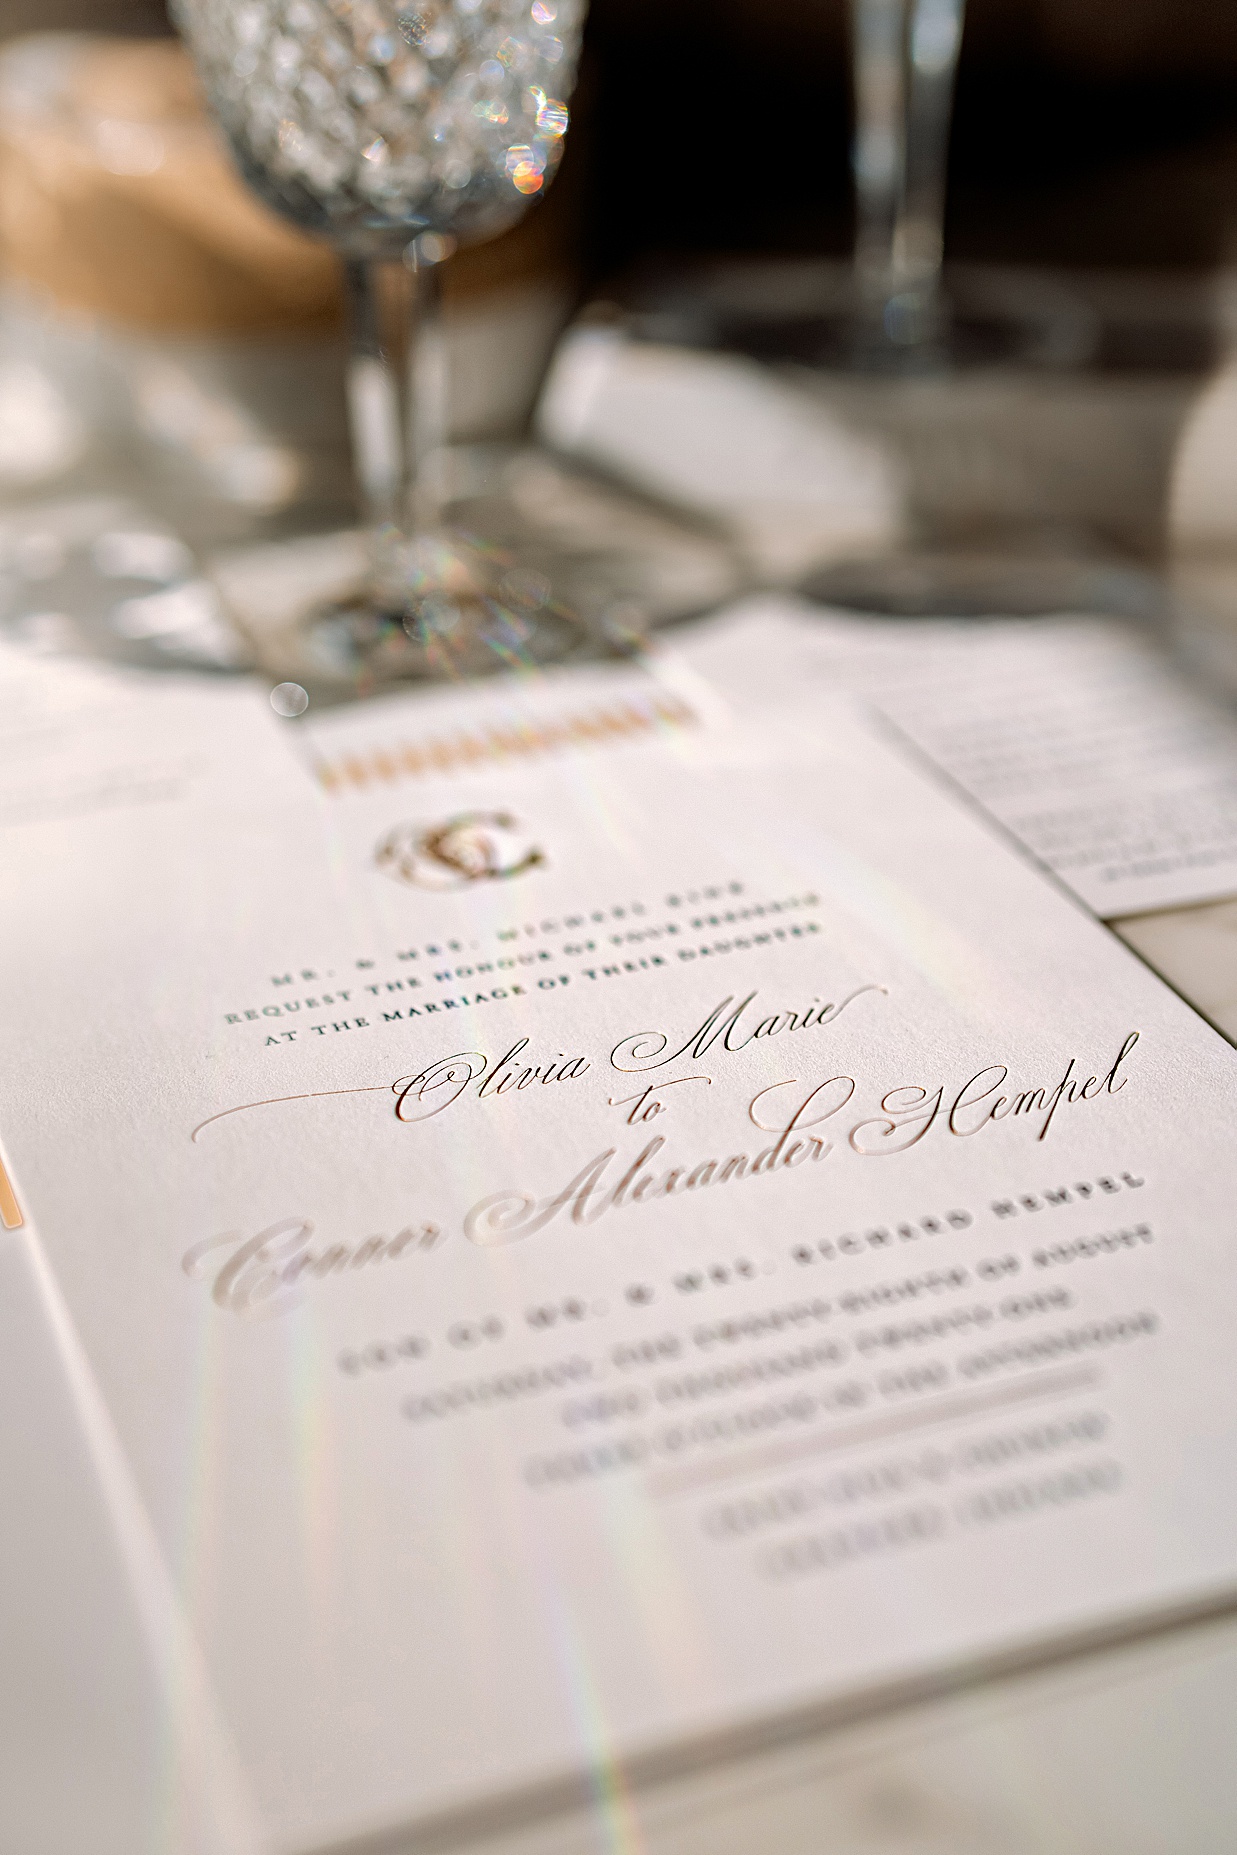 olivia rink wedding, olivia rink wedding invitations, wedding invitations, classic wedding invitations